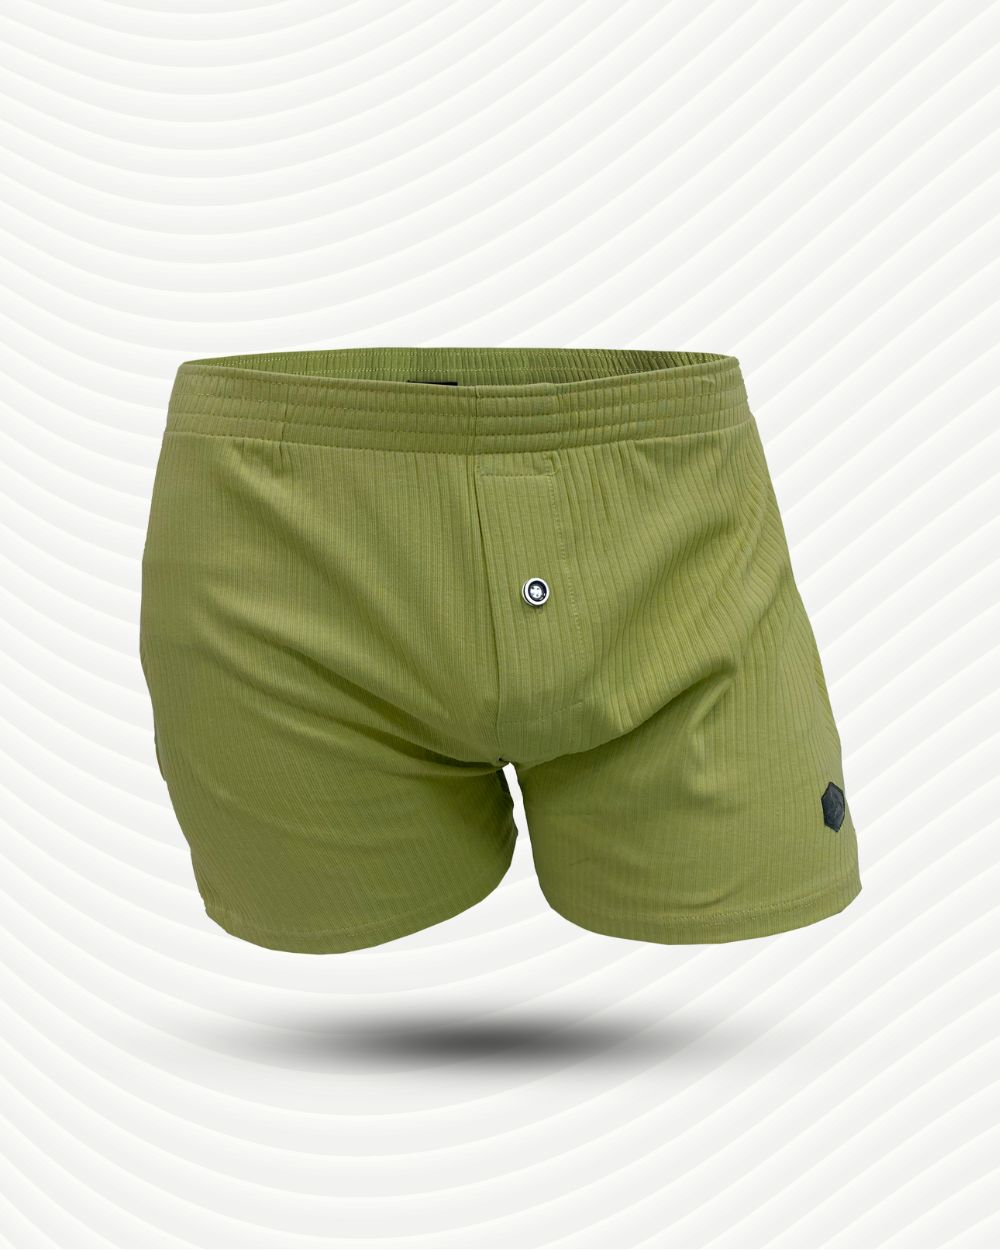 Nostalgia Comfort Lounge Boxer Shorts - Sorber Green [4639]